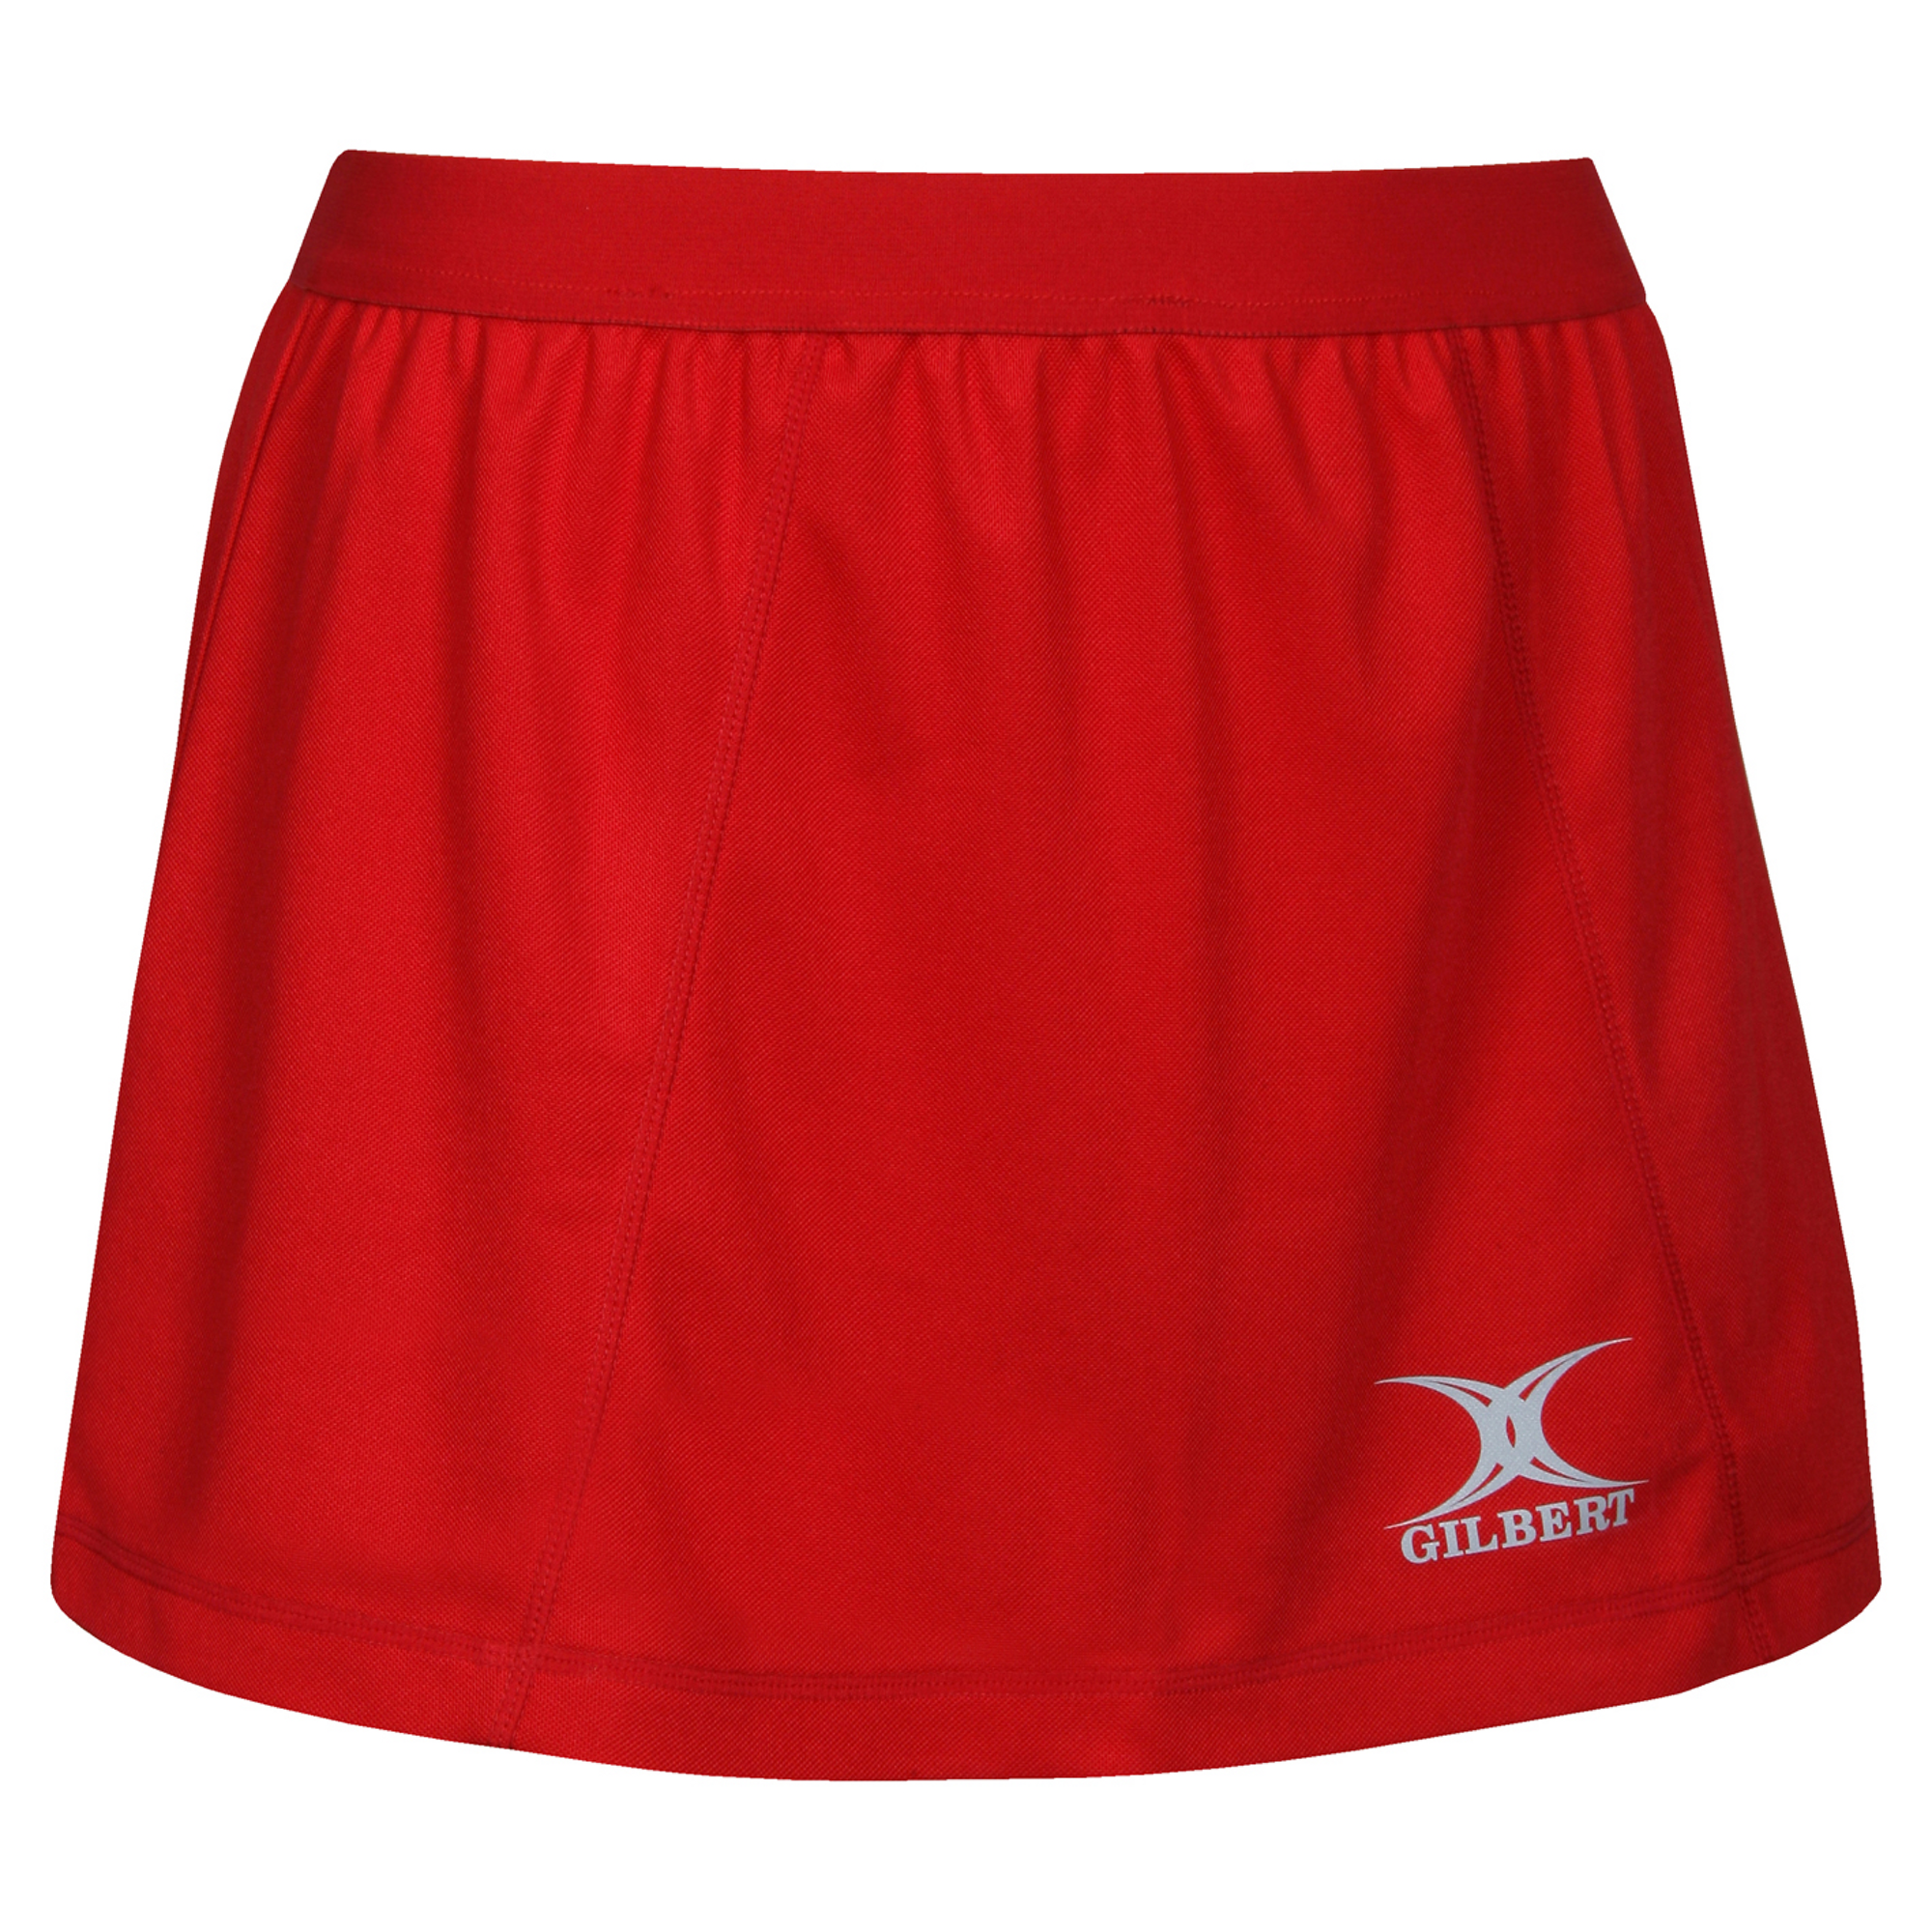 Gilbert Blaze Netball Skirt 8 Red